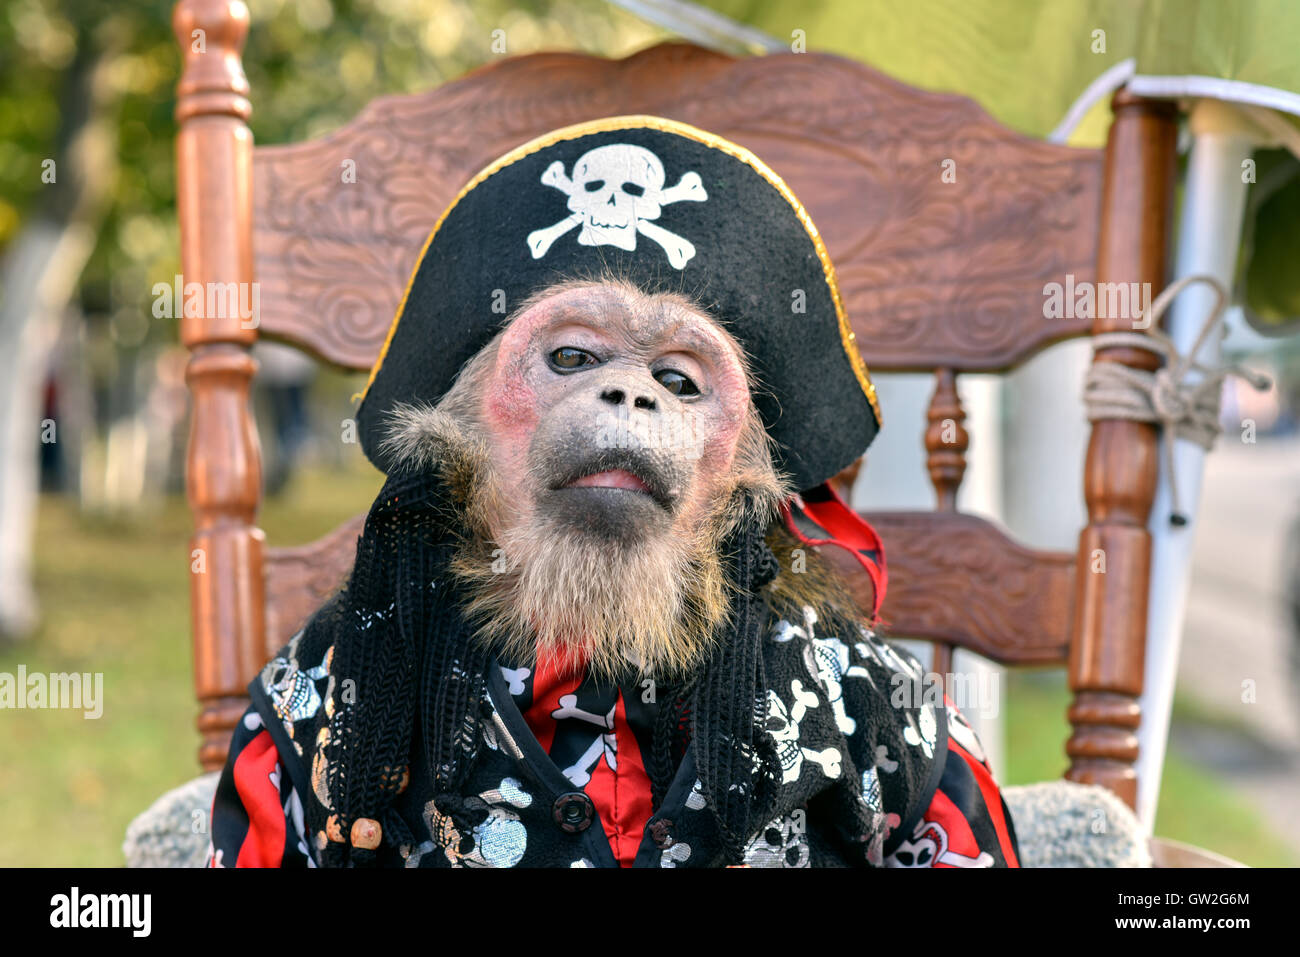 [Image: little-monkey-dressed-in-pirate-costume-...GW2G6M.jpg]